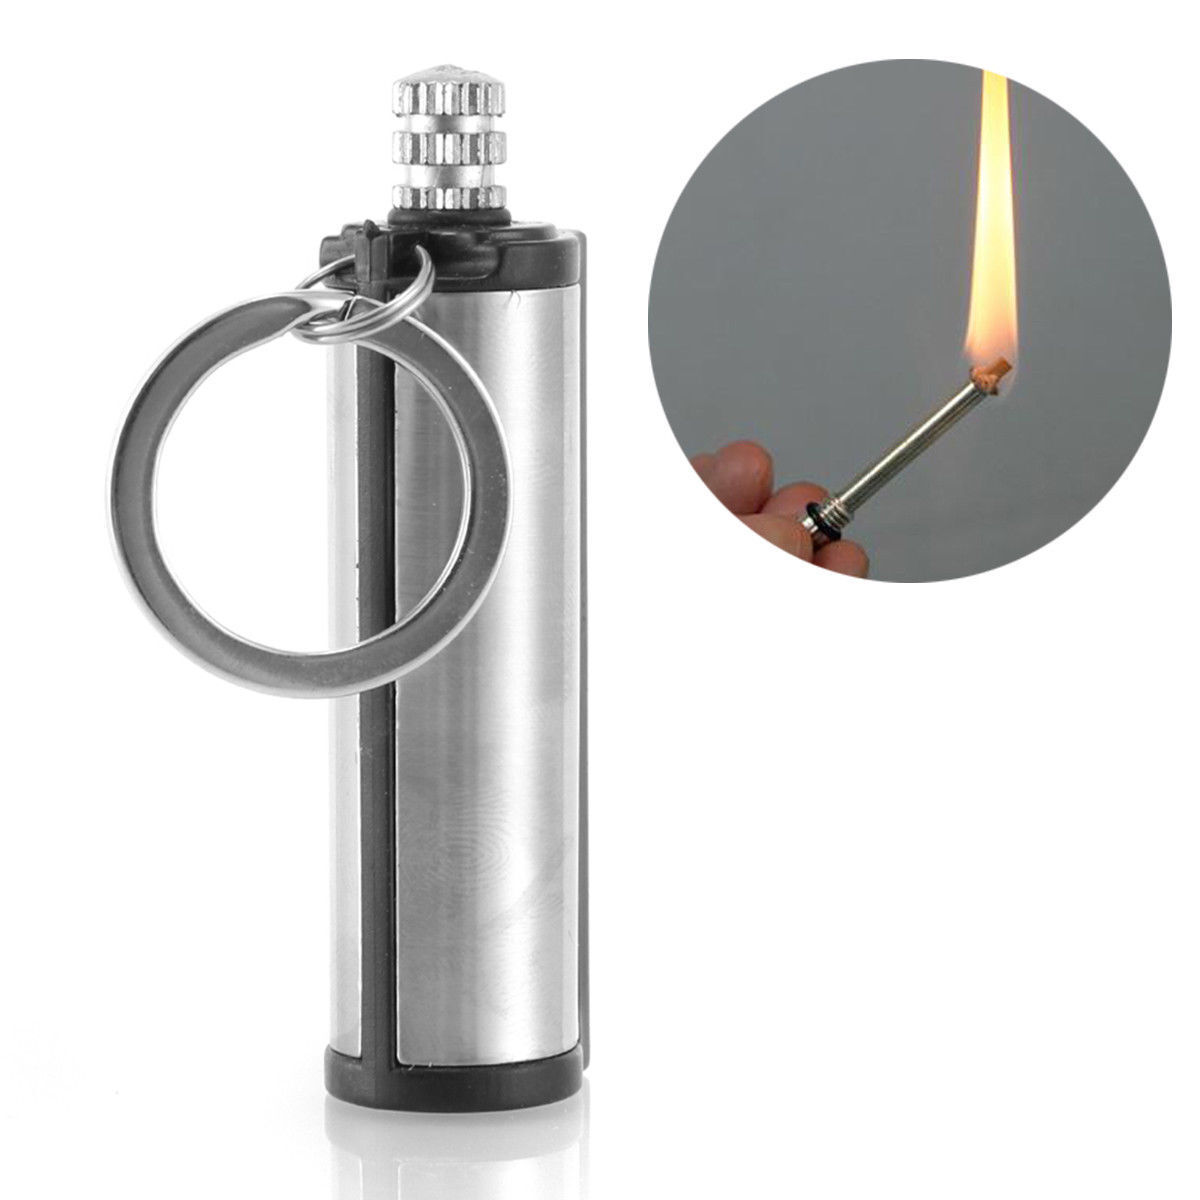 Waterproof Match Permanent Lighter Striker Fire Starter Emergency Survival Kit Unbranded Does Not Apply - фотография #2